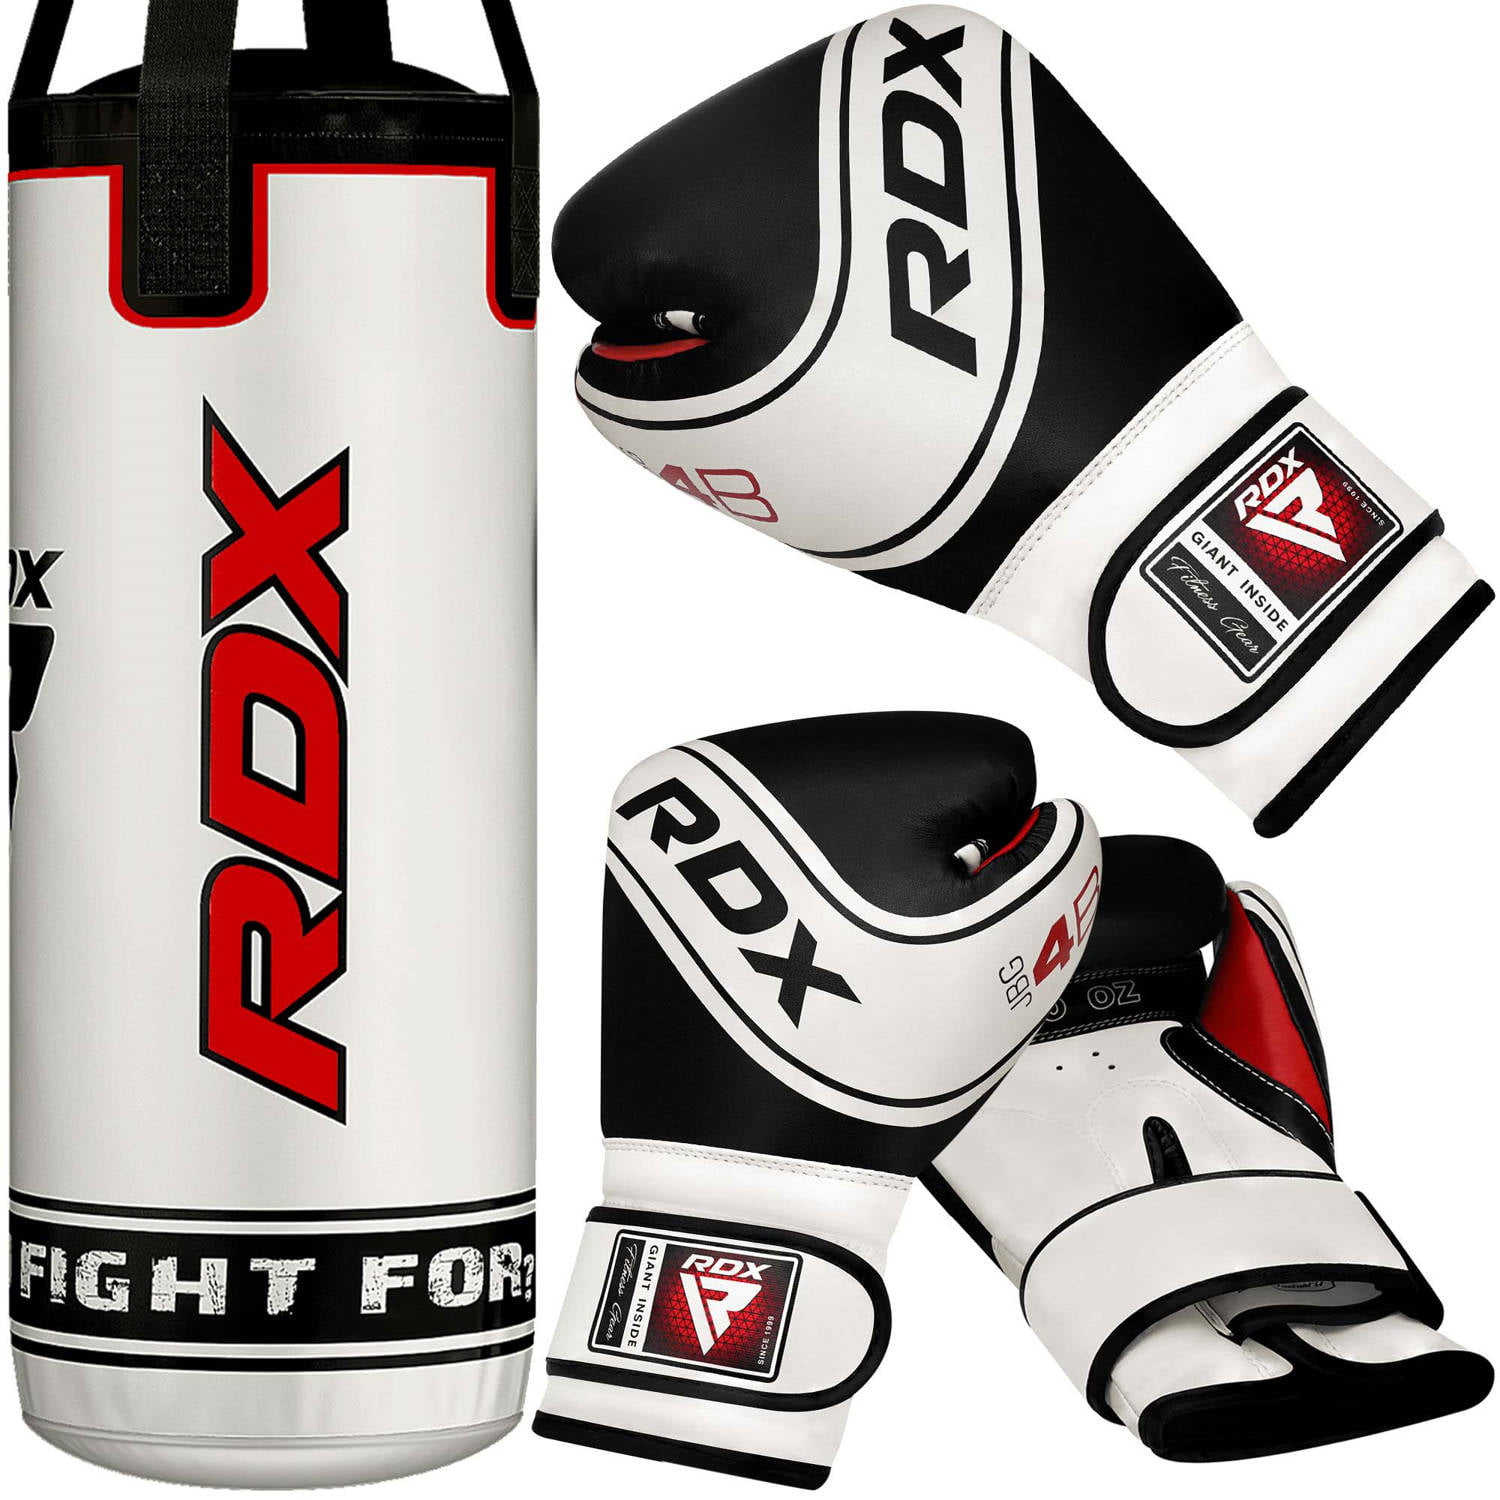 Kids Training Kits New Boxing Set 2ft Filled Heavy Punch Bag Gloves,Bracket 